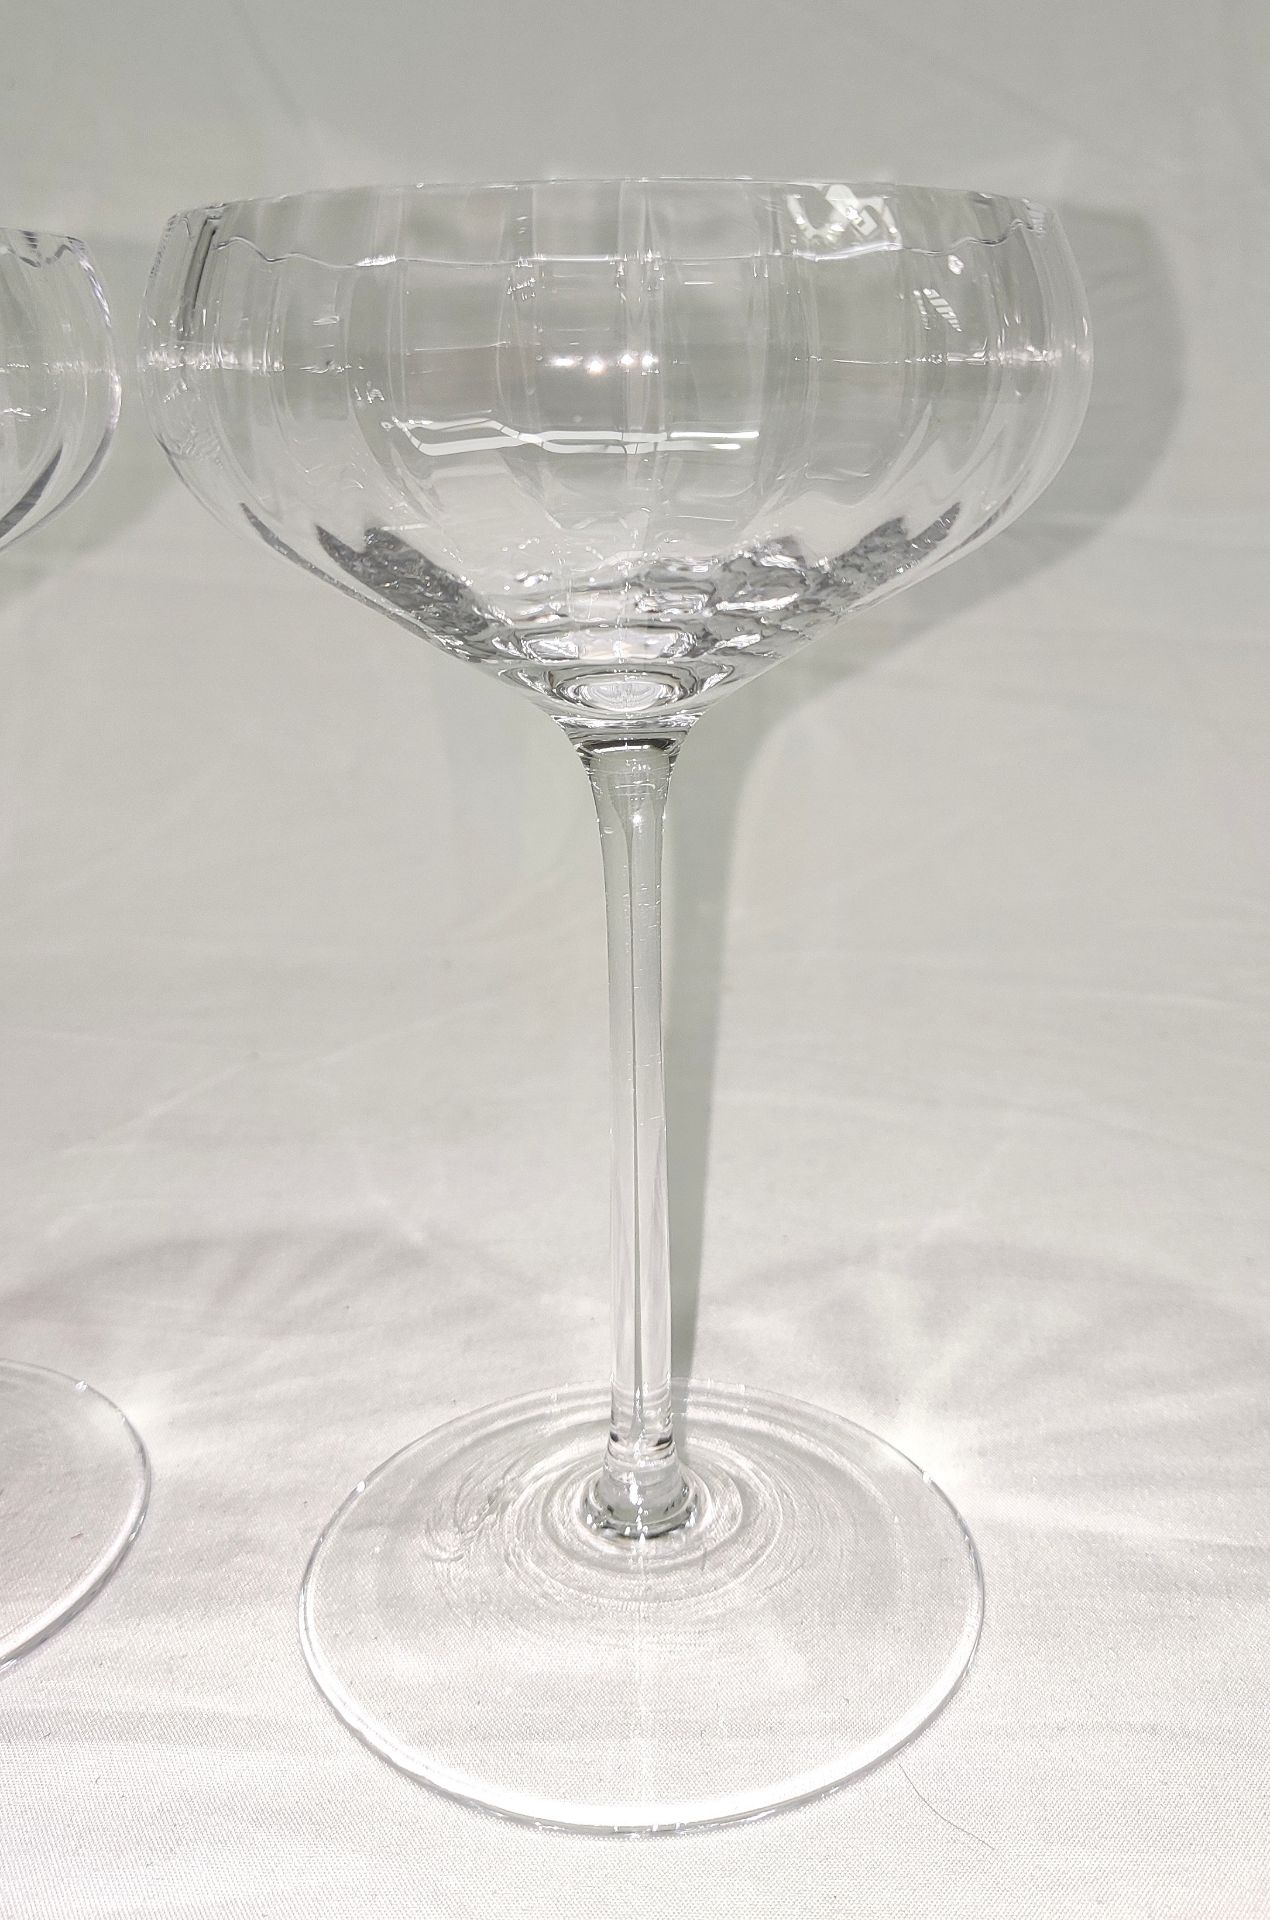 1 x SOHO HOME Pembroke Champagne Coupe - 3 Glasses - Boxed - Original RRP £72 - Ref: 6741245/ - Image 11 of 17